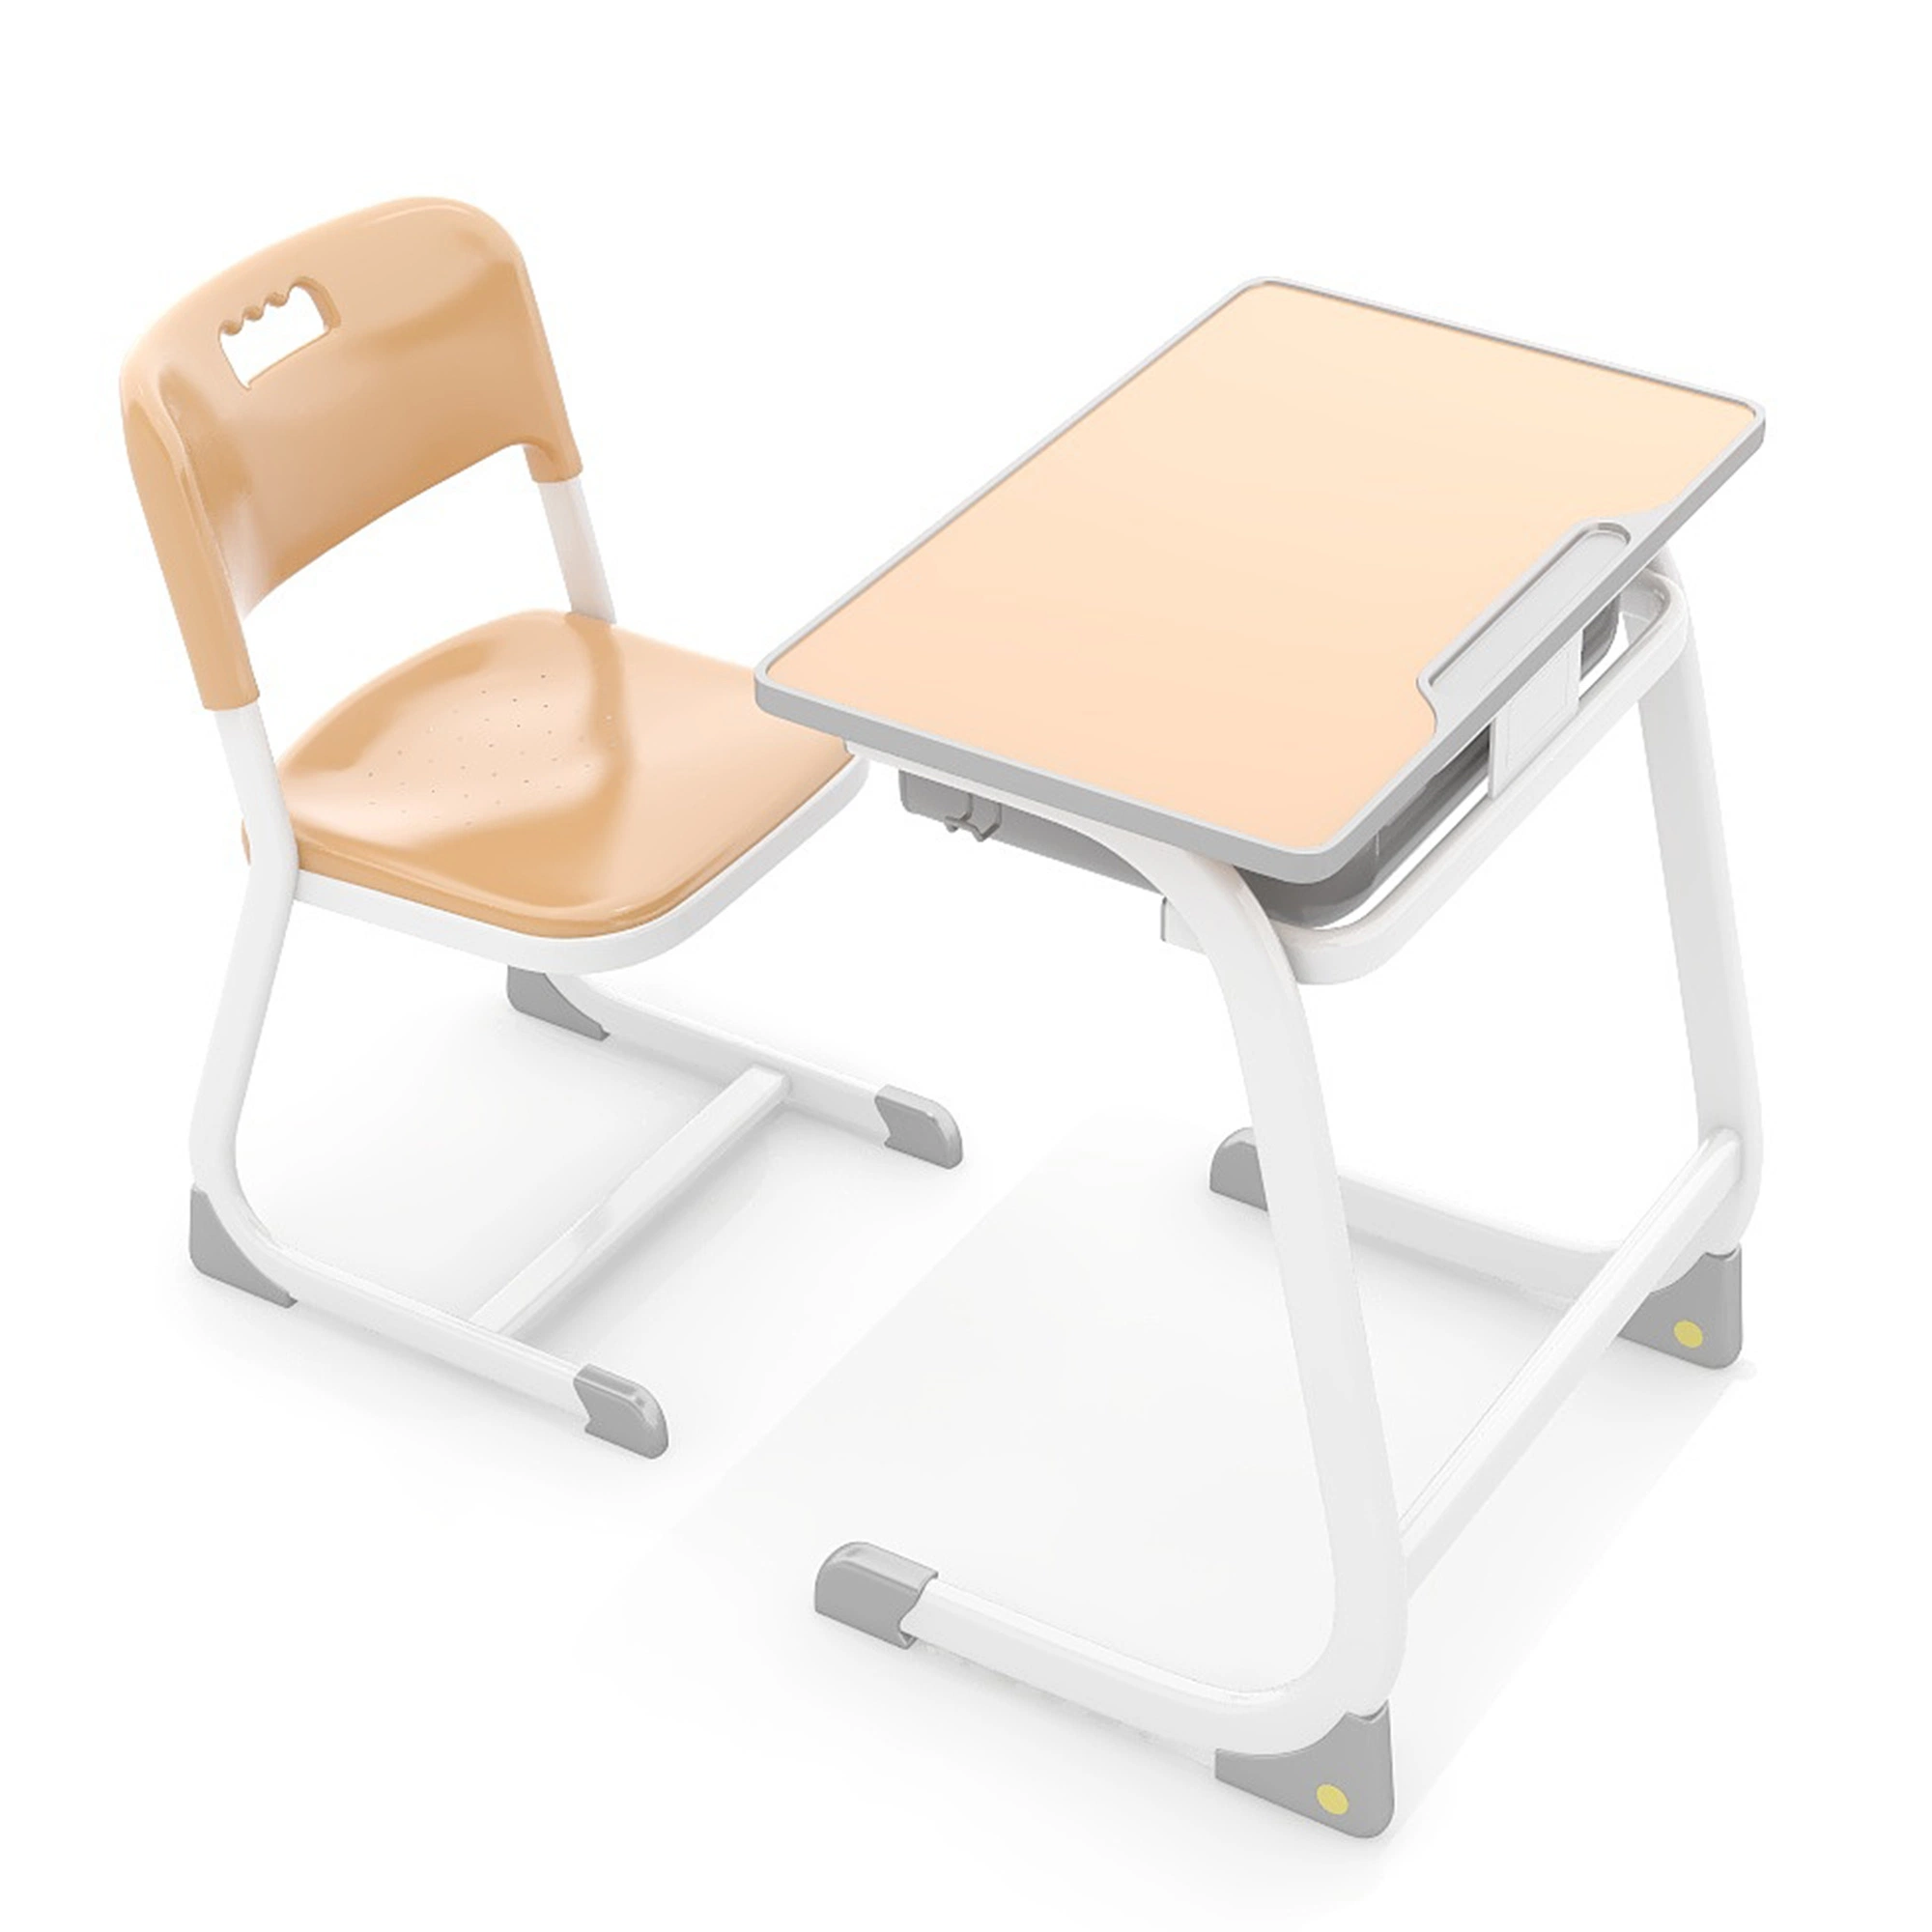 Metal Plastic Wood Plastic Chairs School Study Table University Desk Conjunto de sillas